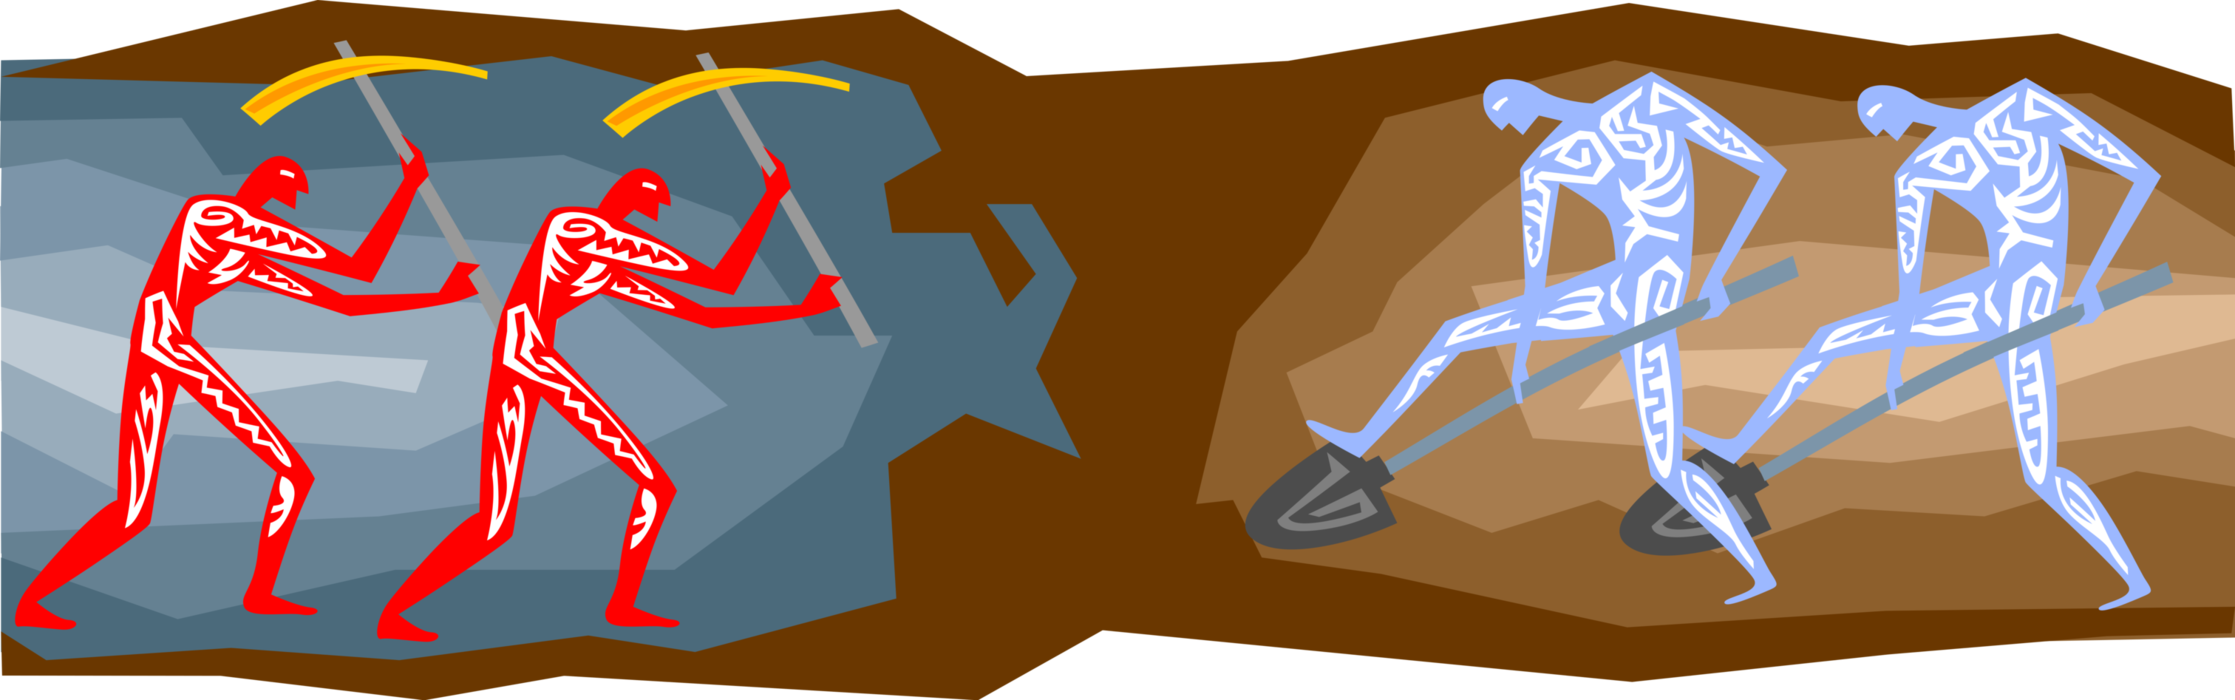 Vector Illustration of Men Digging Underground Tunnel In Dirt